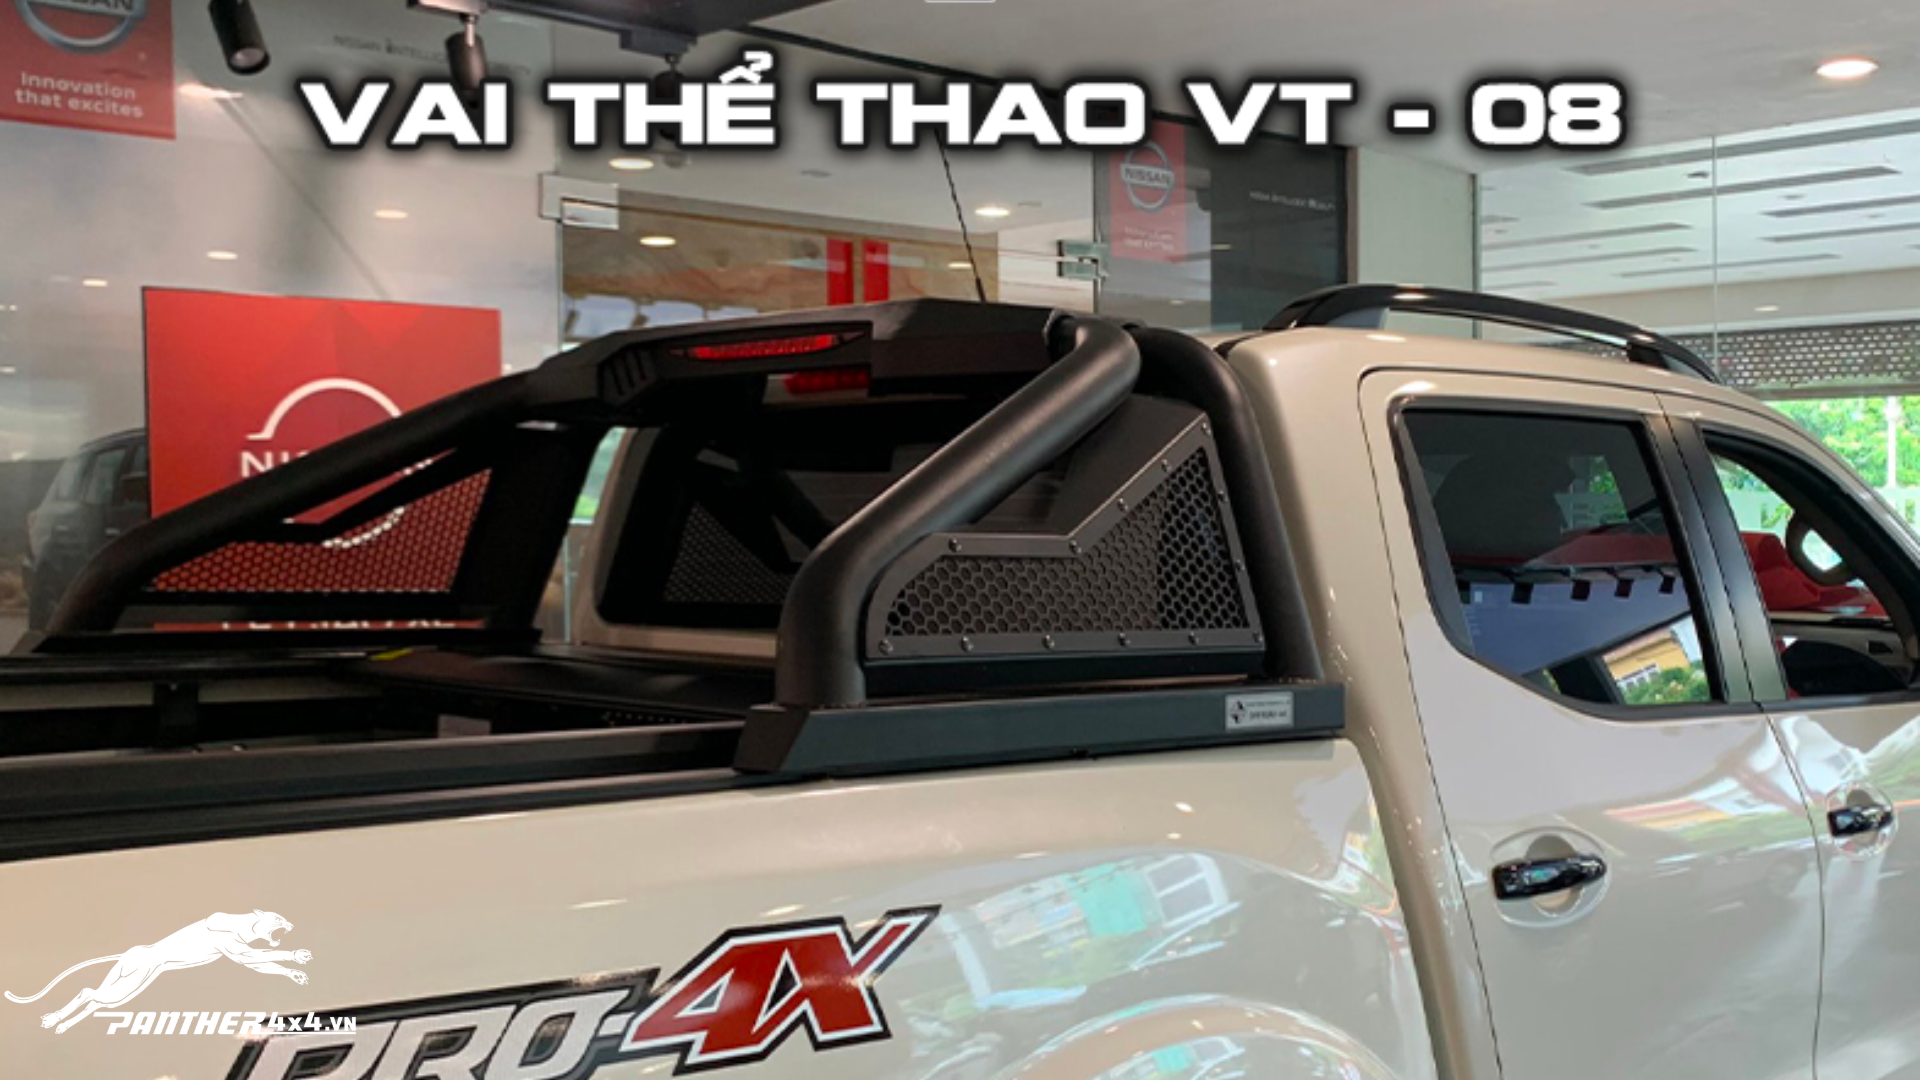 Thanh Thể Thao Cantech VT08 Cho Ford Ranger (2016-2021)